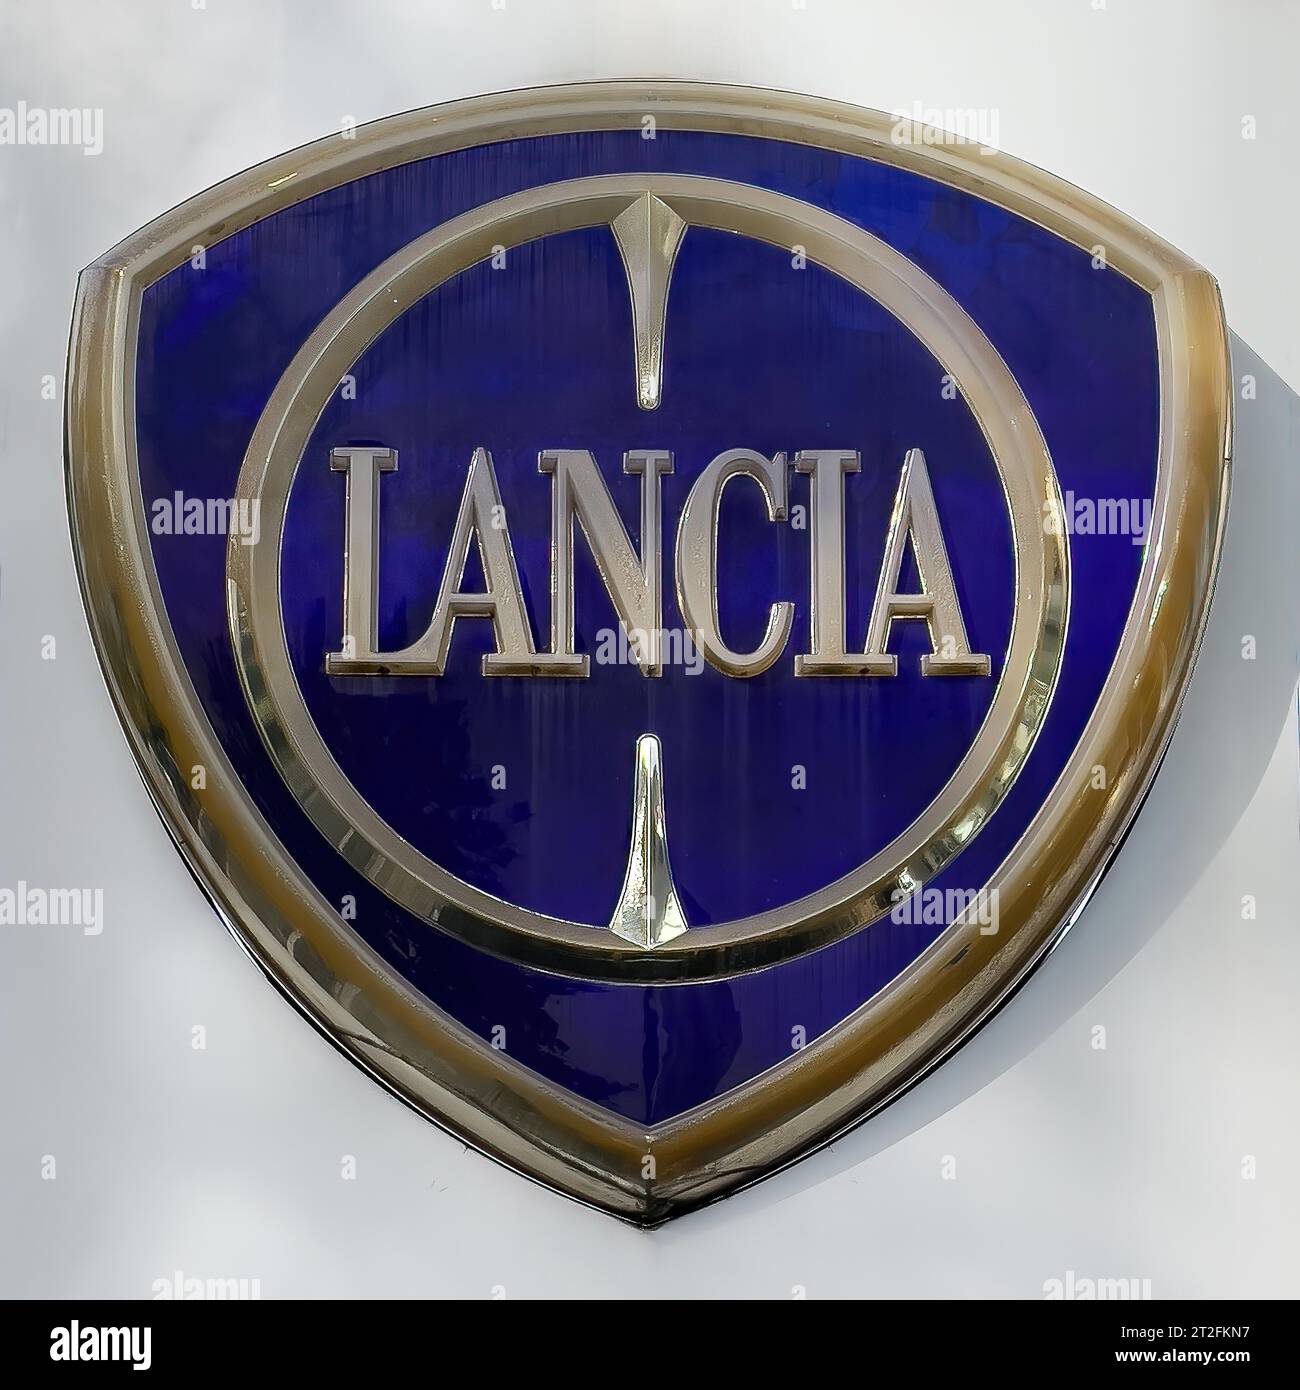 Logo of Italian car brand Lancia led by international company Stellantis, Germany Stock Photo